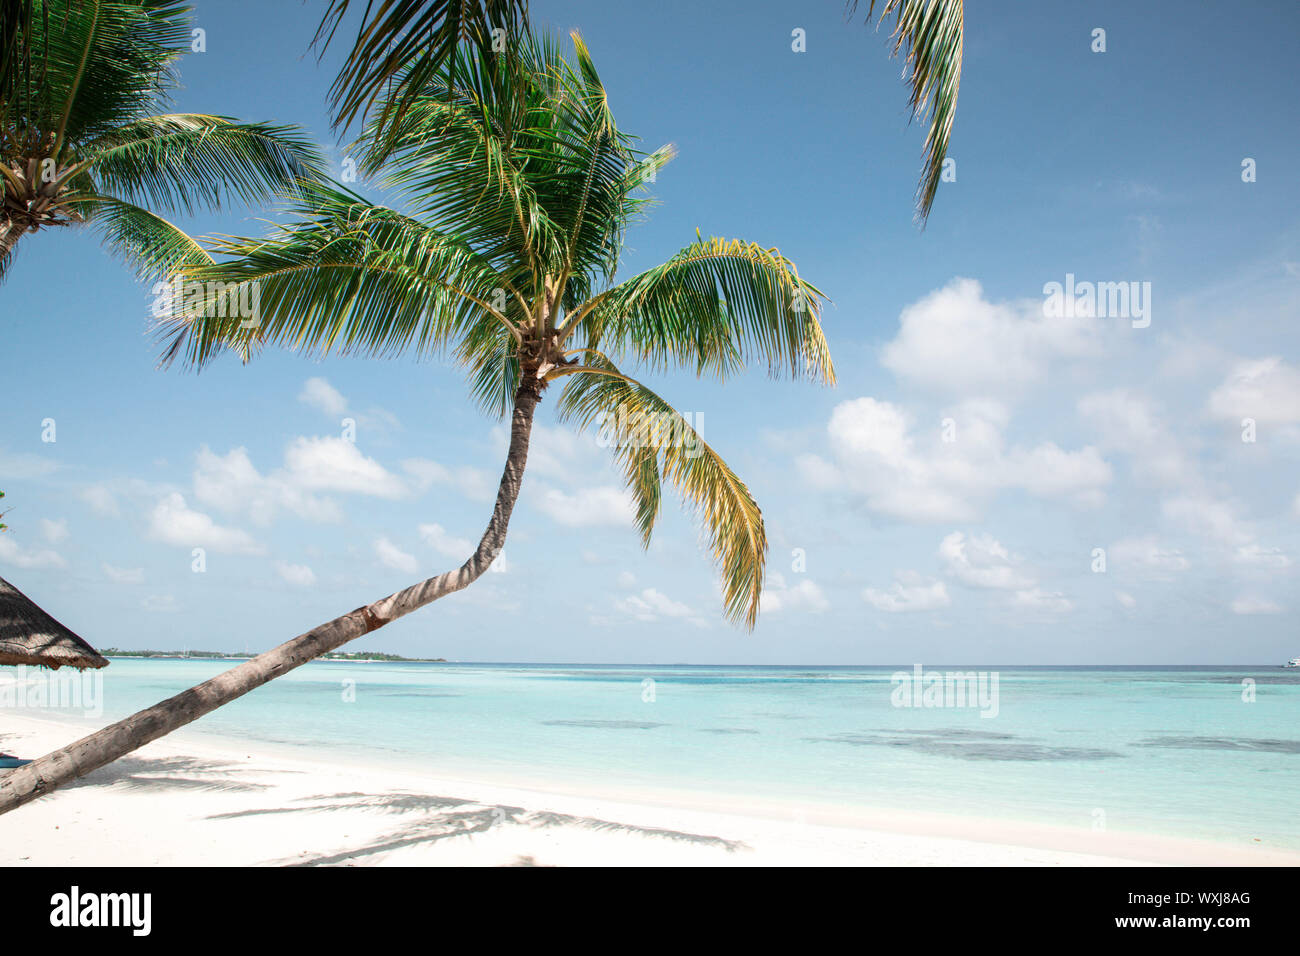 Palm tree on a tropical beach, Maldives Stock Photo